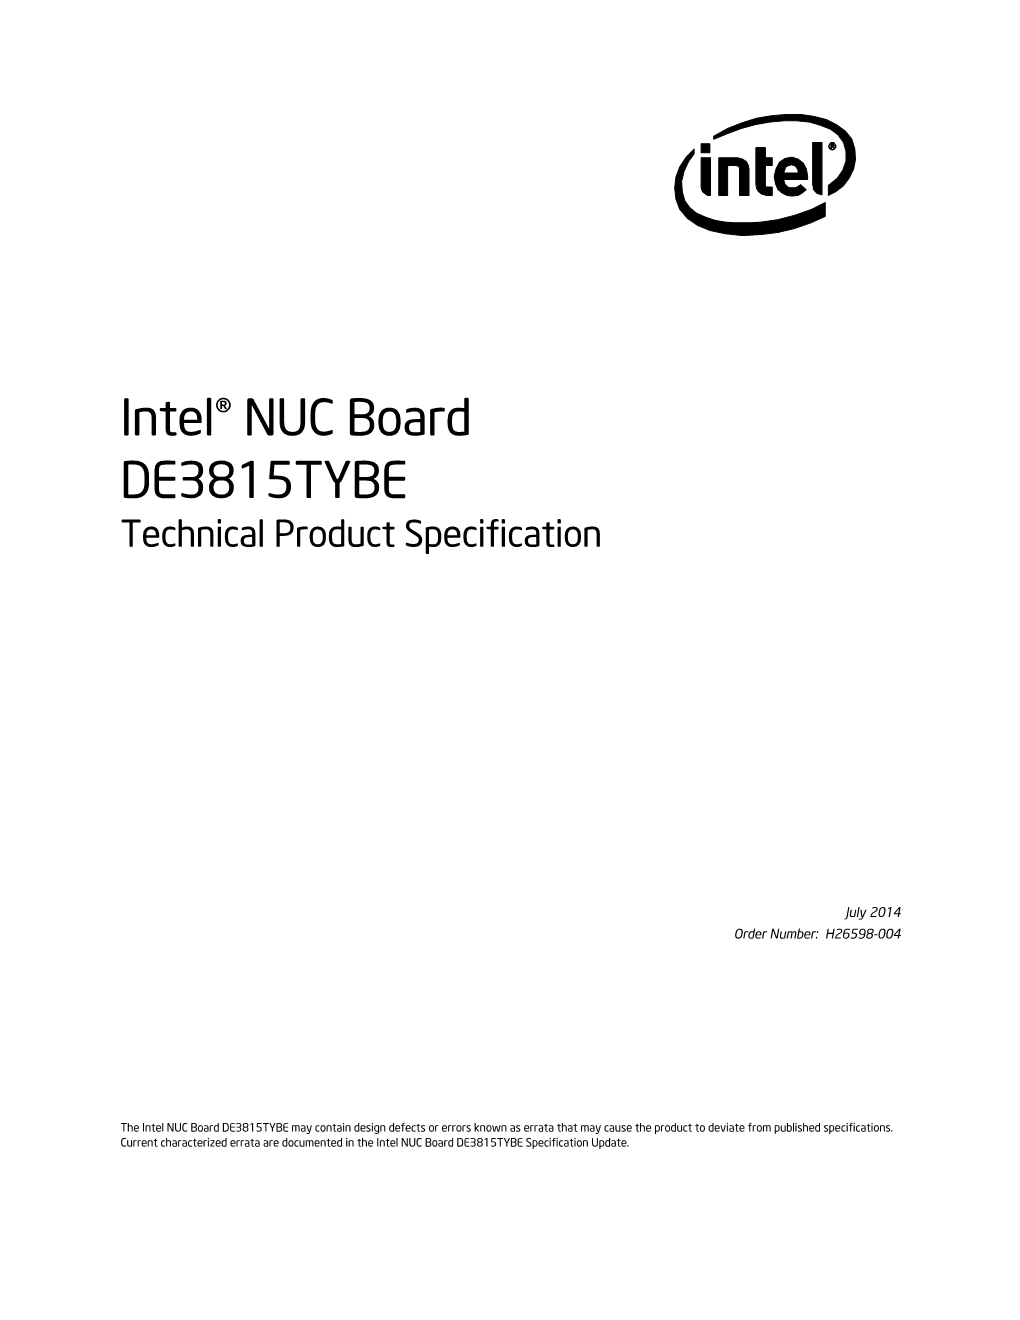 Intel® NUC Board DE3815TYBE Technical Product Specification